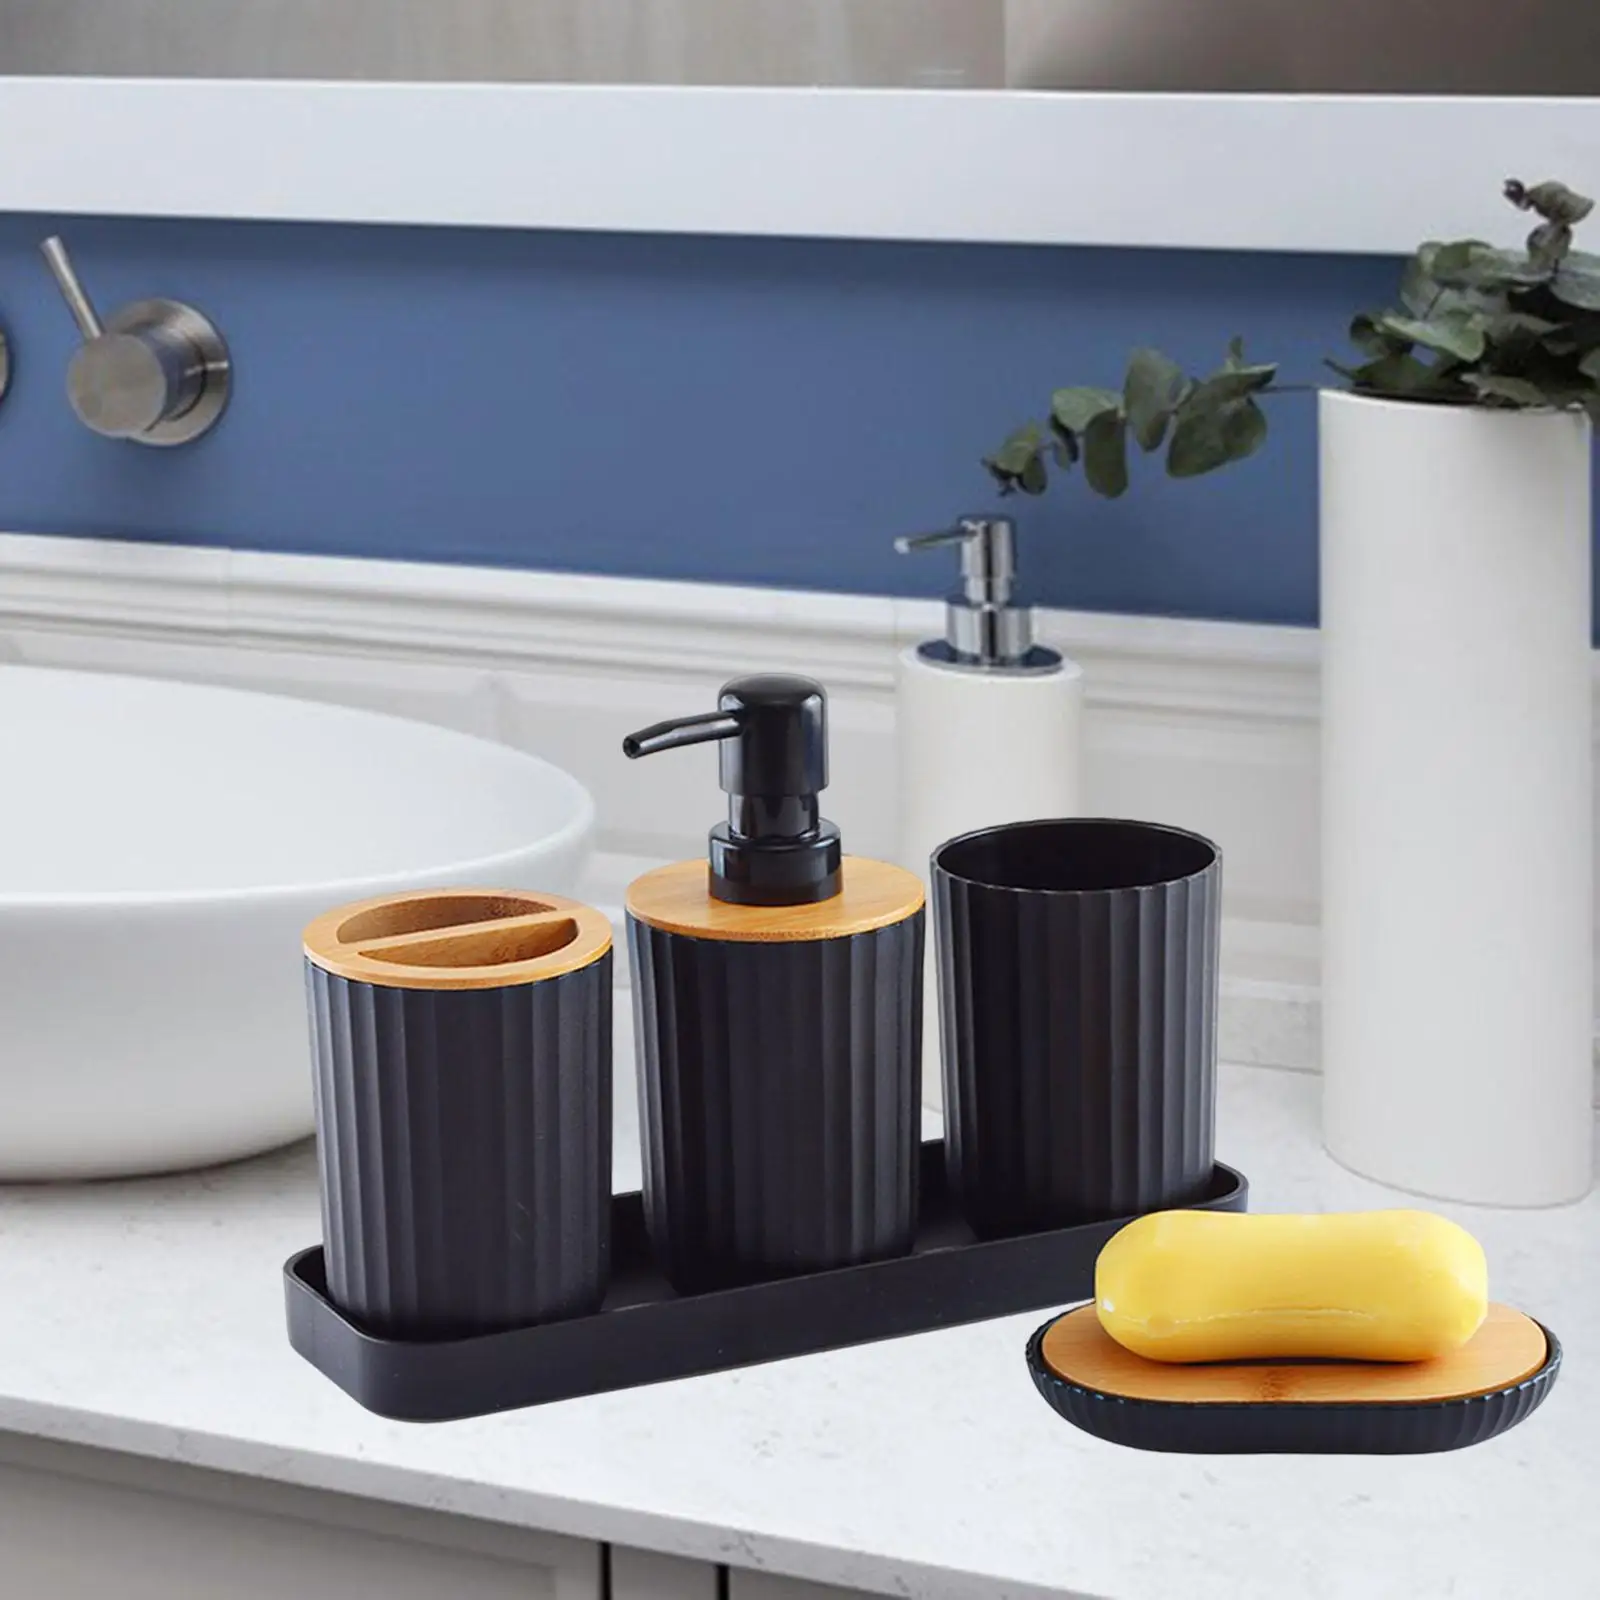  5x   Nordic   Bathroom   Accessories   Set   Lotion   Bottle     Wood   Countertop 